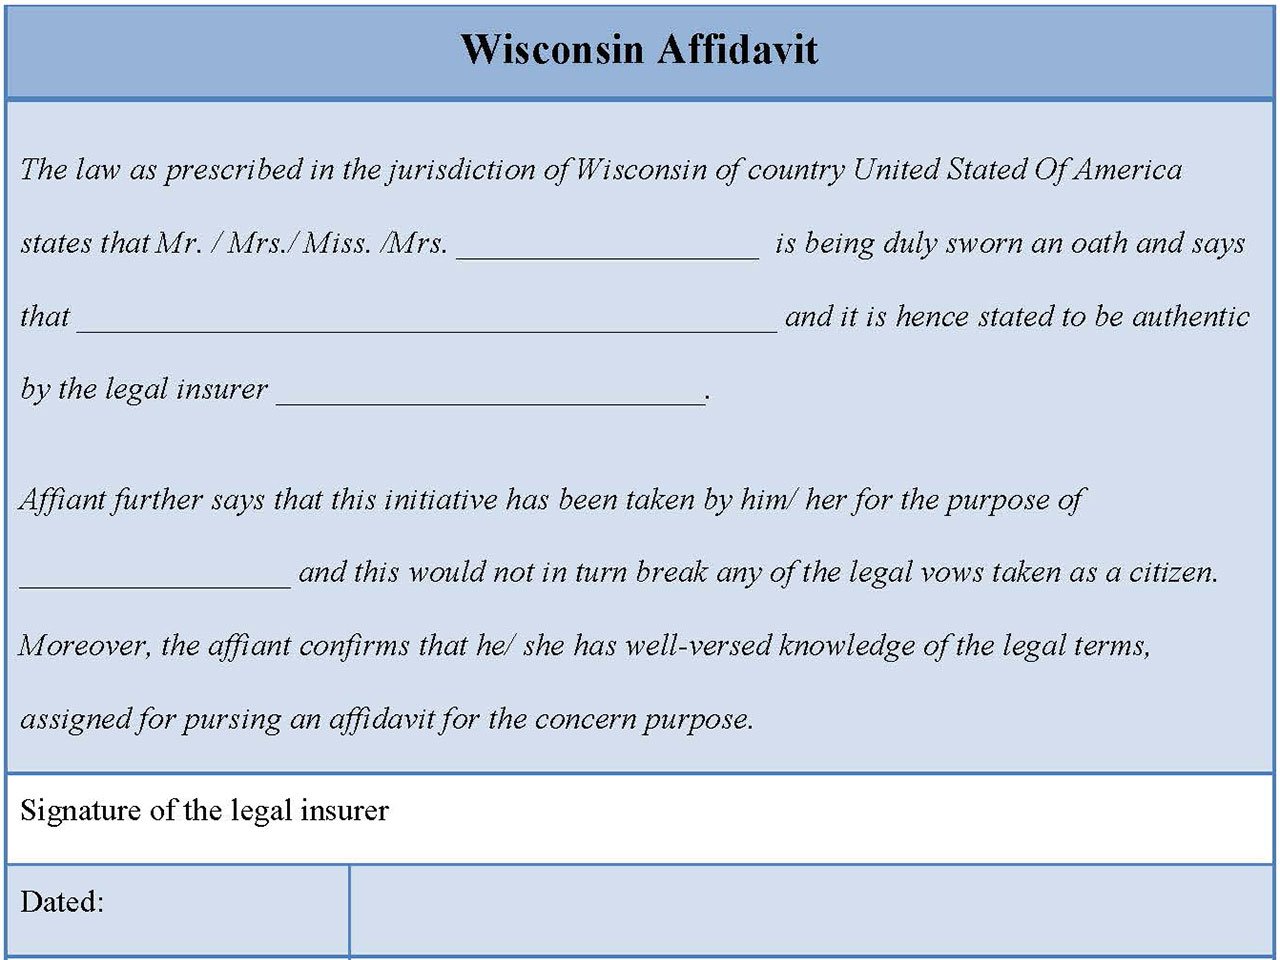 Wisconsin Affidavit Form